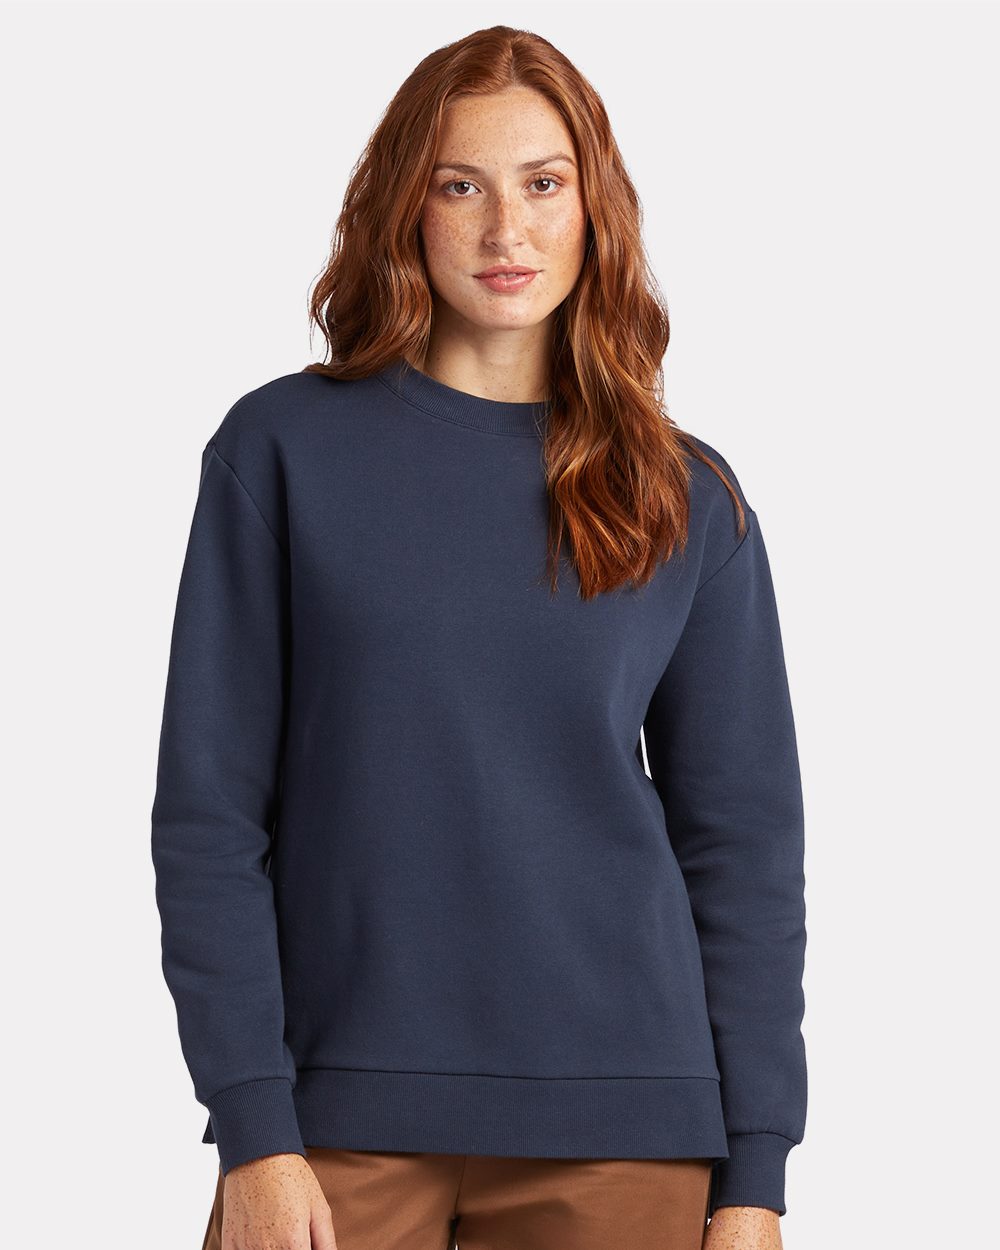 Women's Eco-Cozy Fleece Crewneck Sweatshirt - Alternative 8809PF